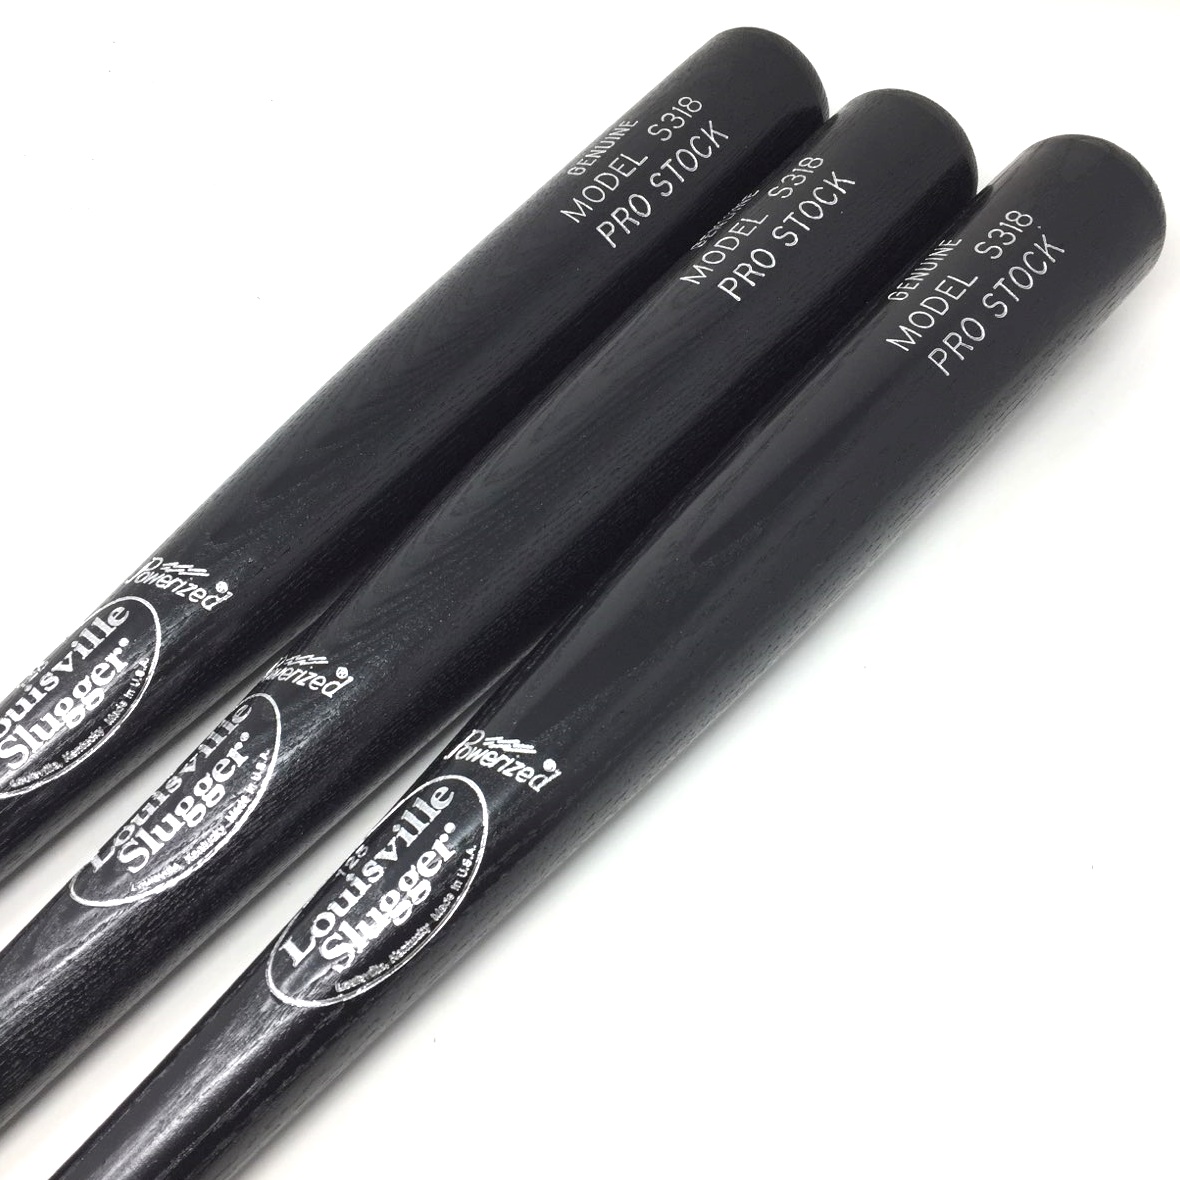 wood-baseball-bat-pack-33-inch-3-bats-s318-pro-stock BATPACK-0019  Does not apply <p>3 pack of S318 Pro Stock Louisville Slugger Wood Baseball Bats.